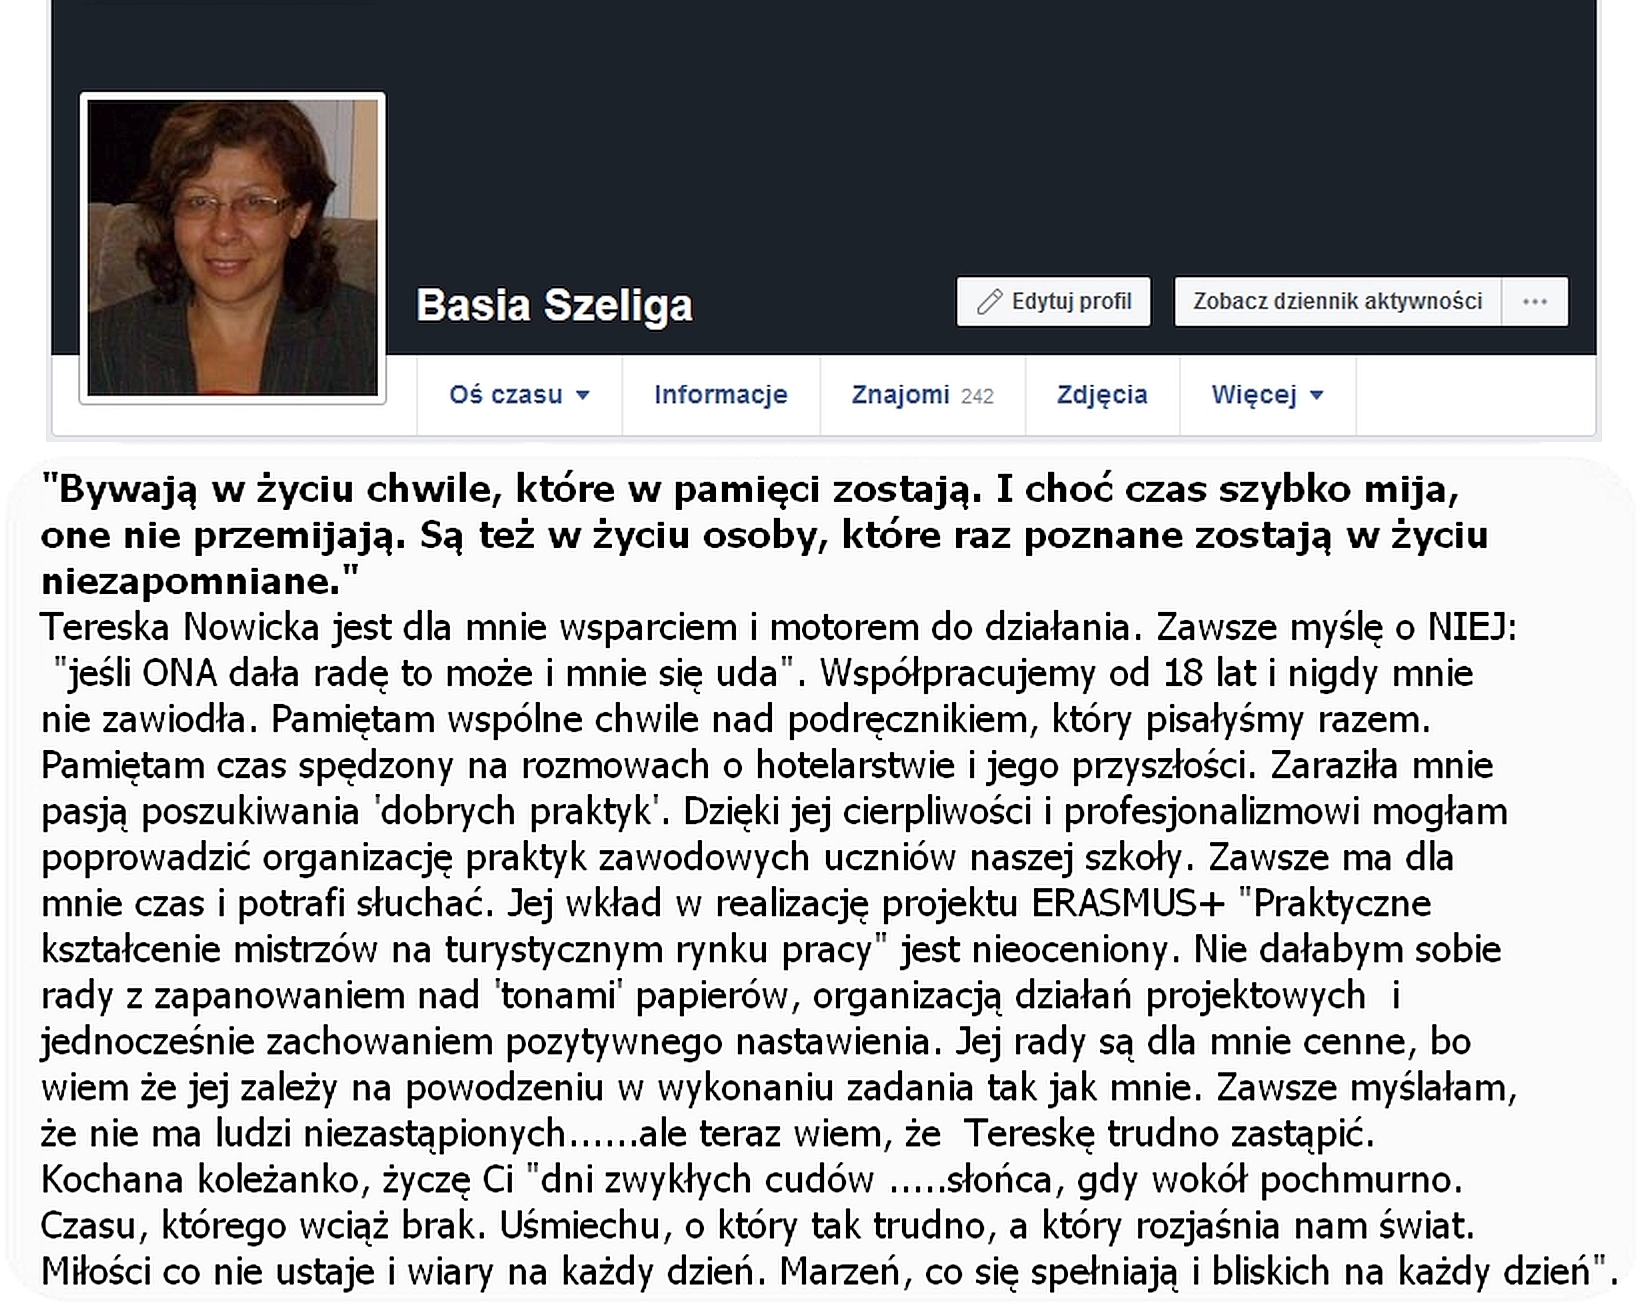 03.Barbara Szeliga